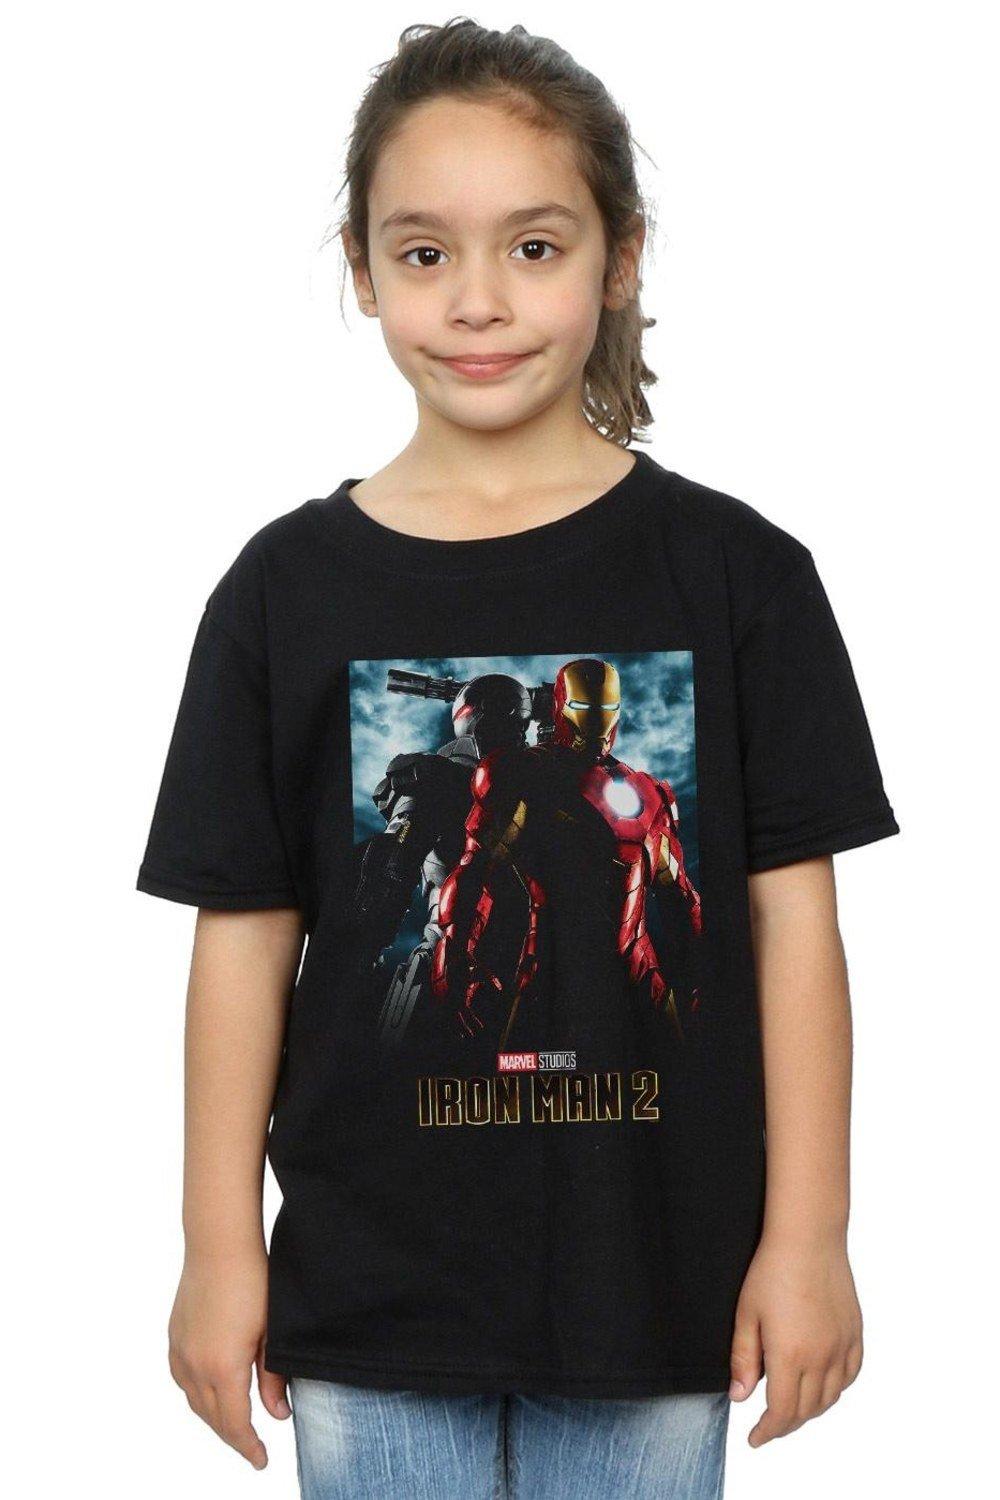 Iron Man 2 Poster Cotton T-Shirt